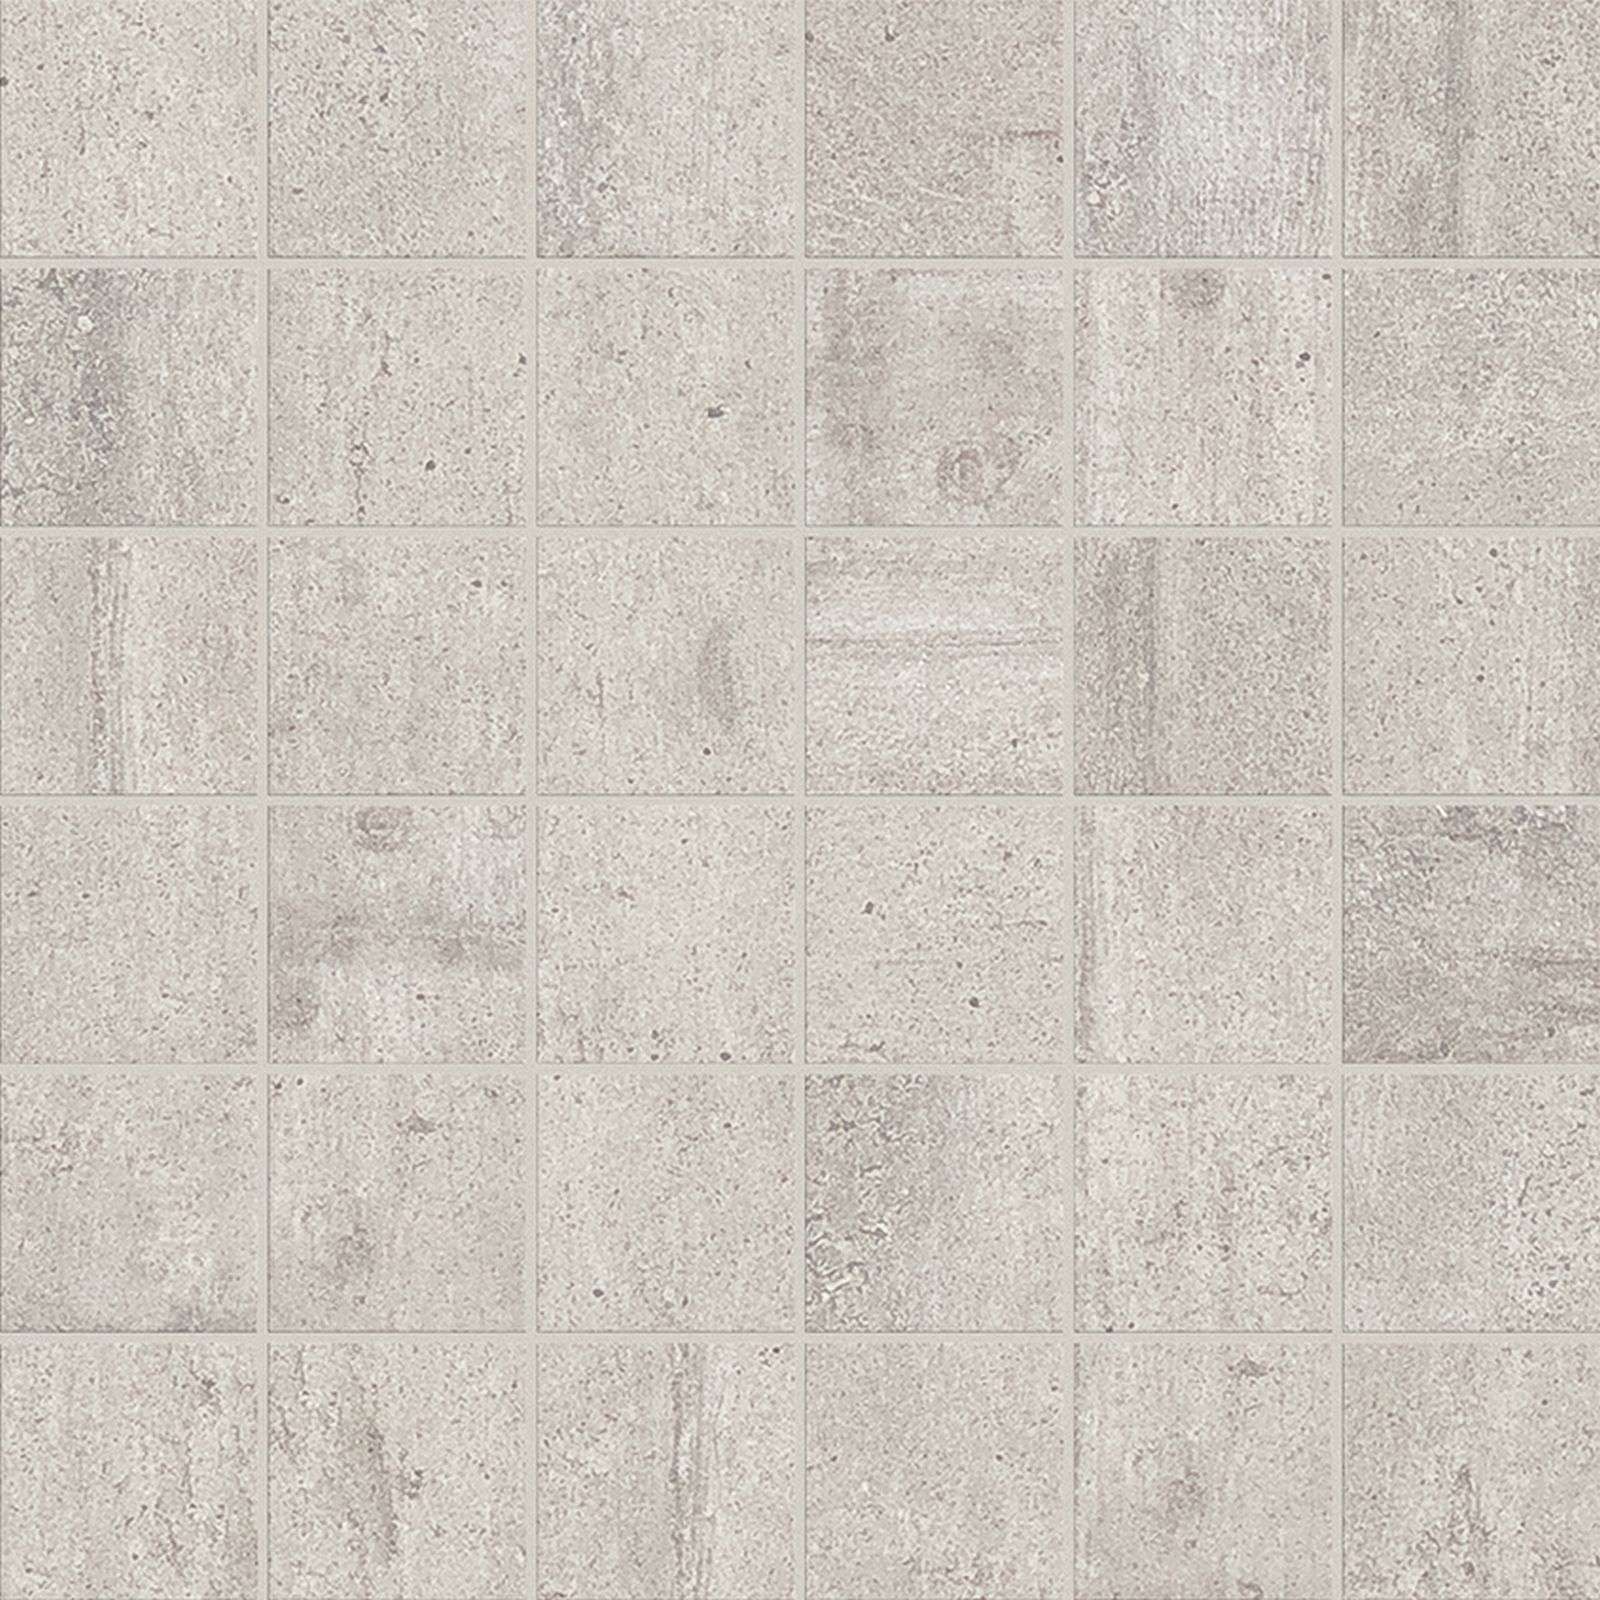 Мозаика Provenza Re-Use Mosaico 5X5 Fango Sand Naturale E1R1, цвет серый бежевый, поверхность натуральная, квадрат, 300x300